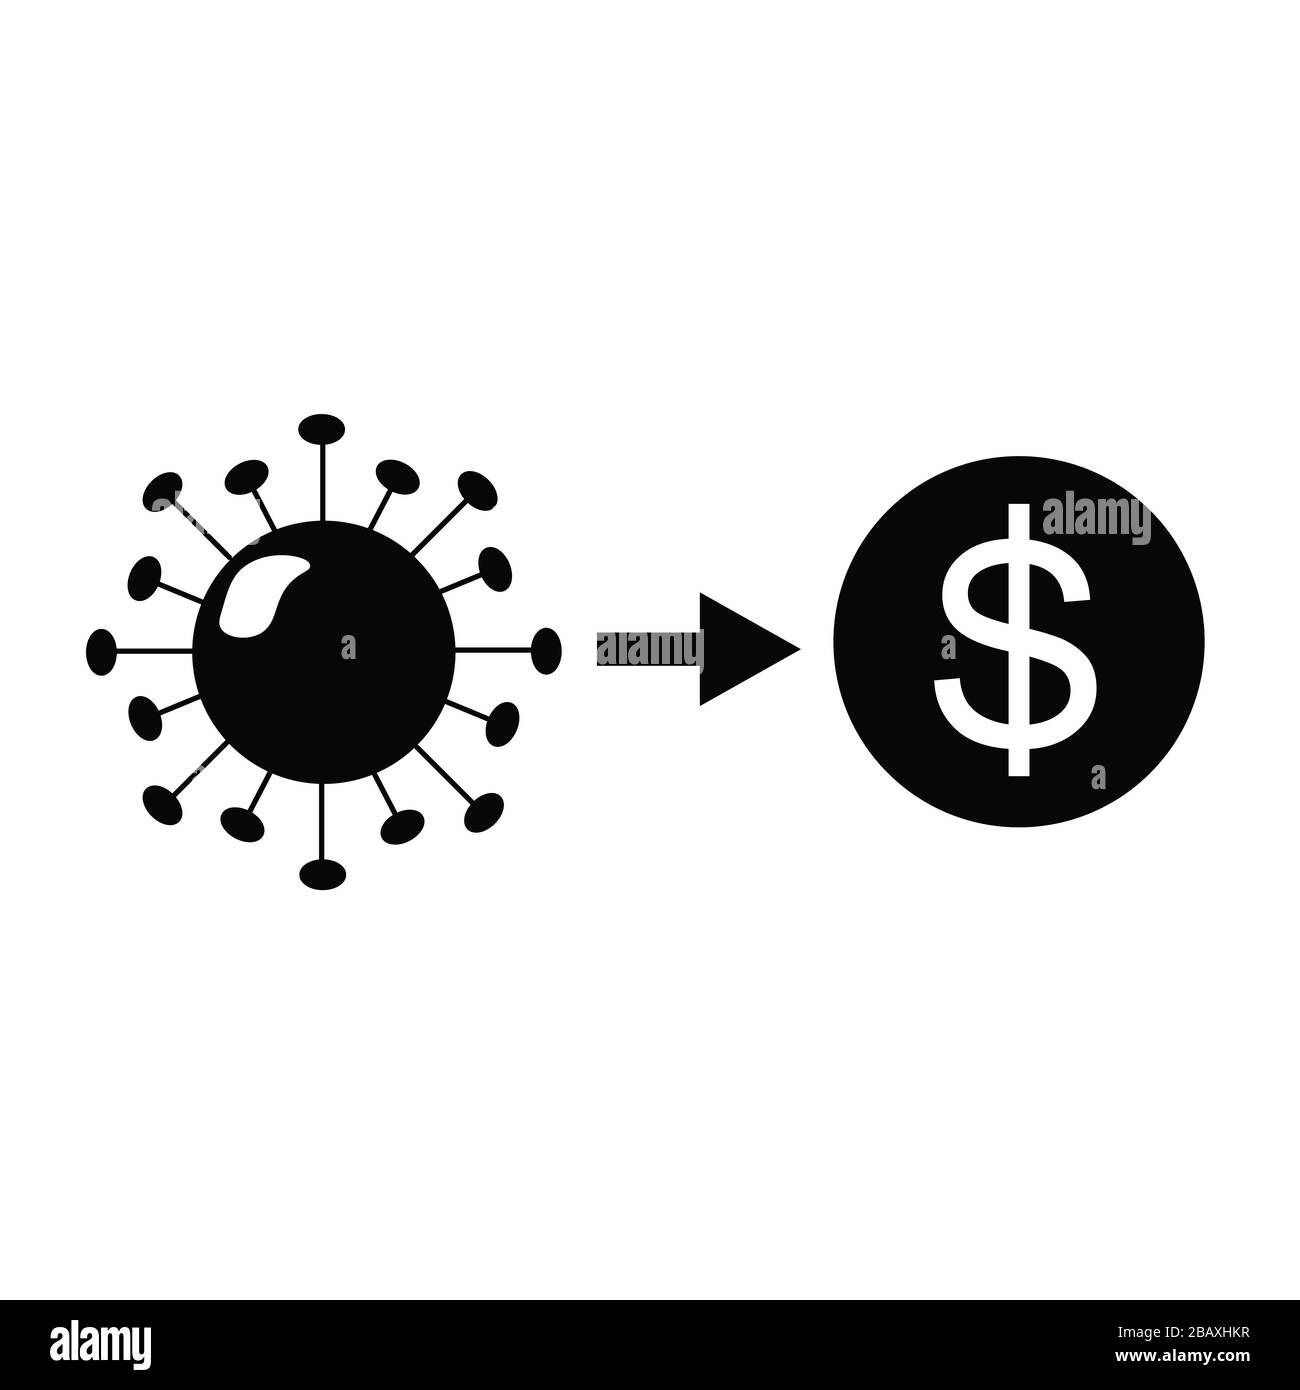 Coronavirus COVID-19 virus turning to a dollar coin. Concept illustration. Stock Photo